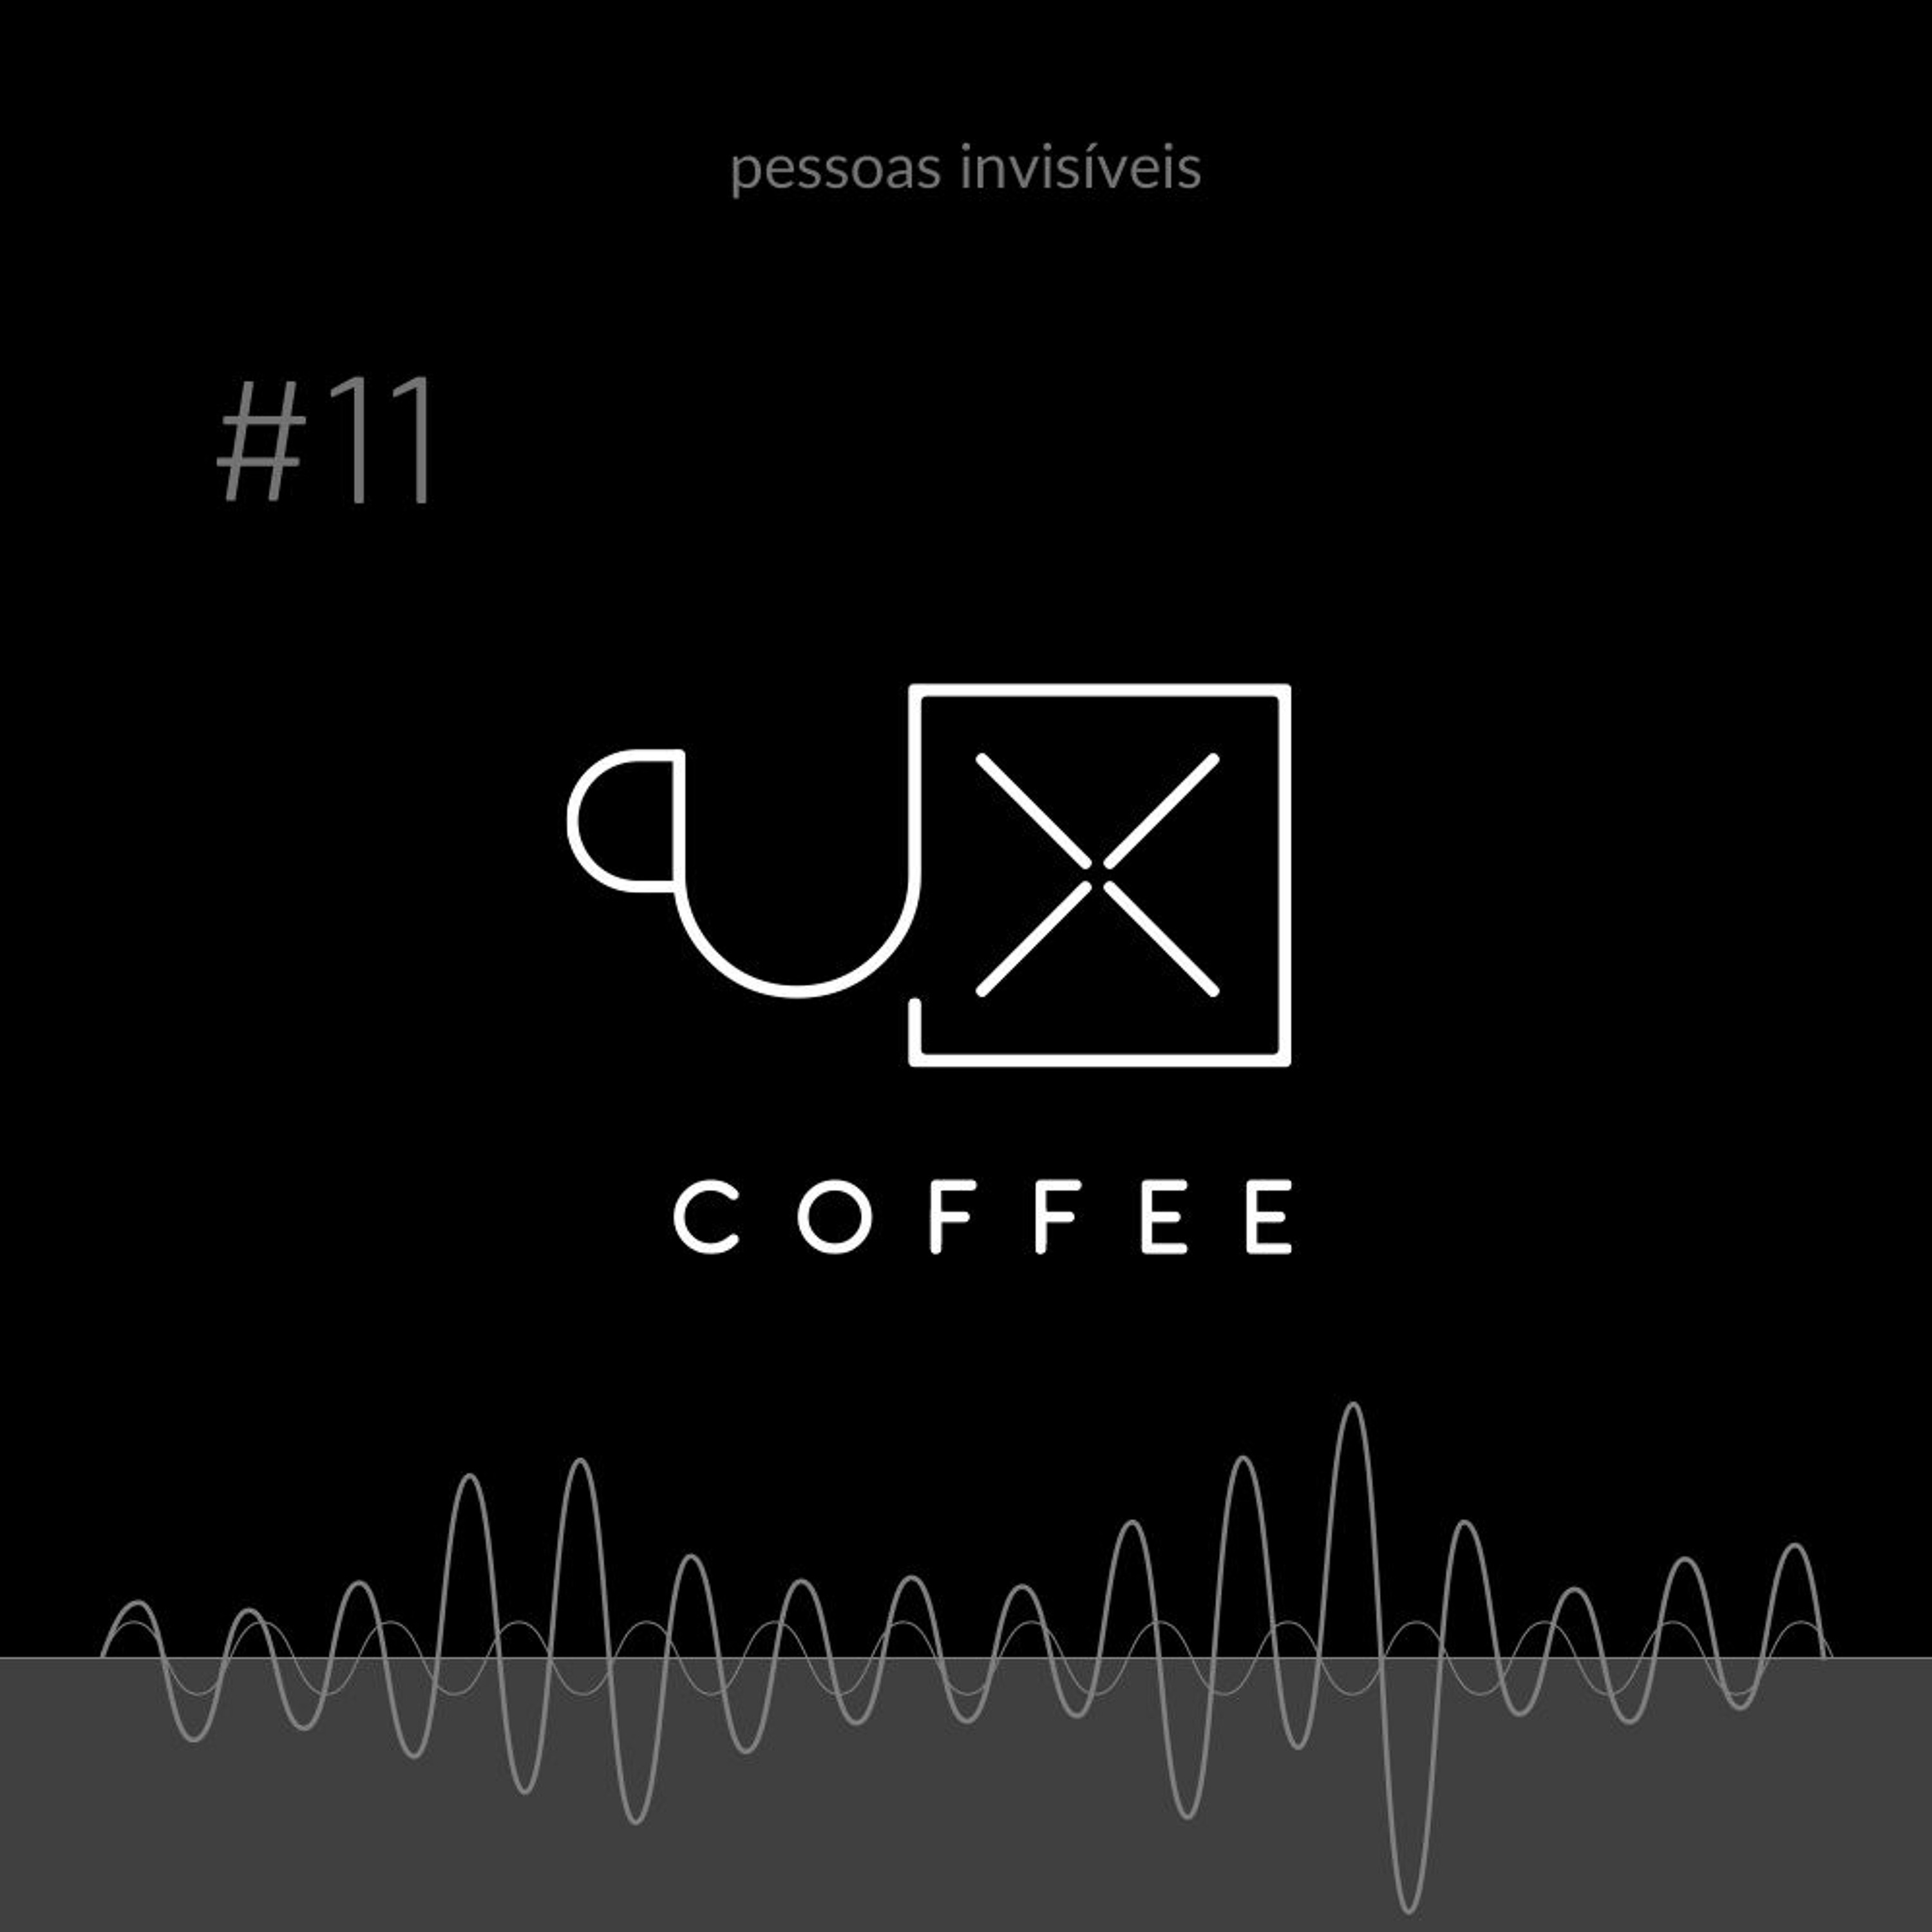 025 - UXcoffee#11 - Pessoas Invisíveis